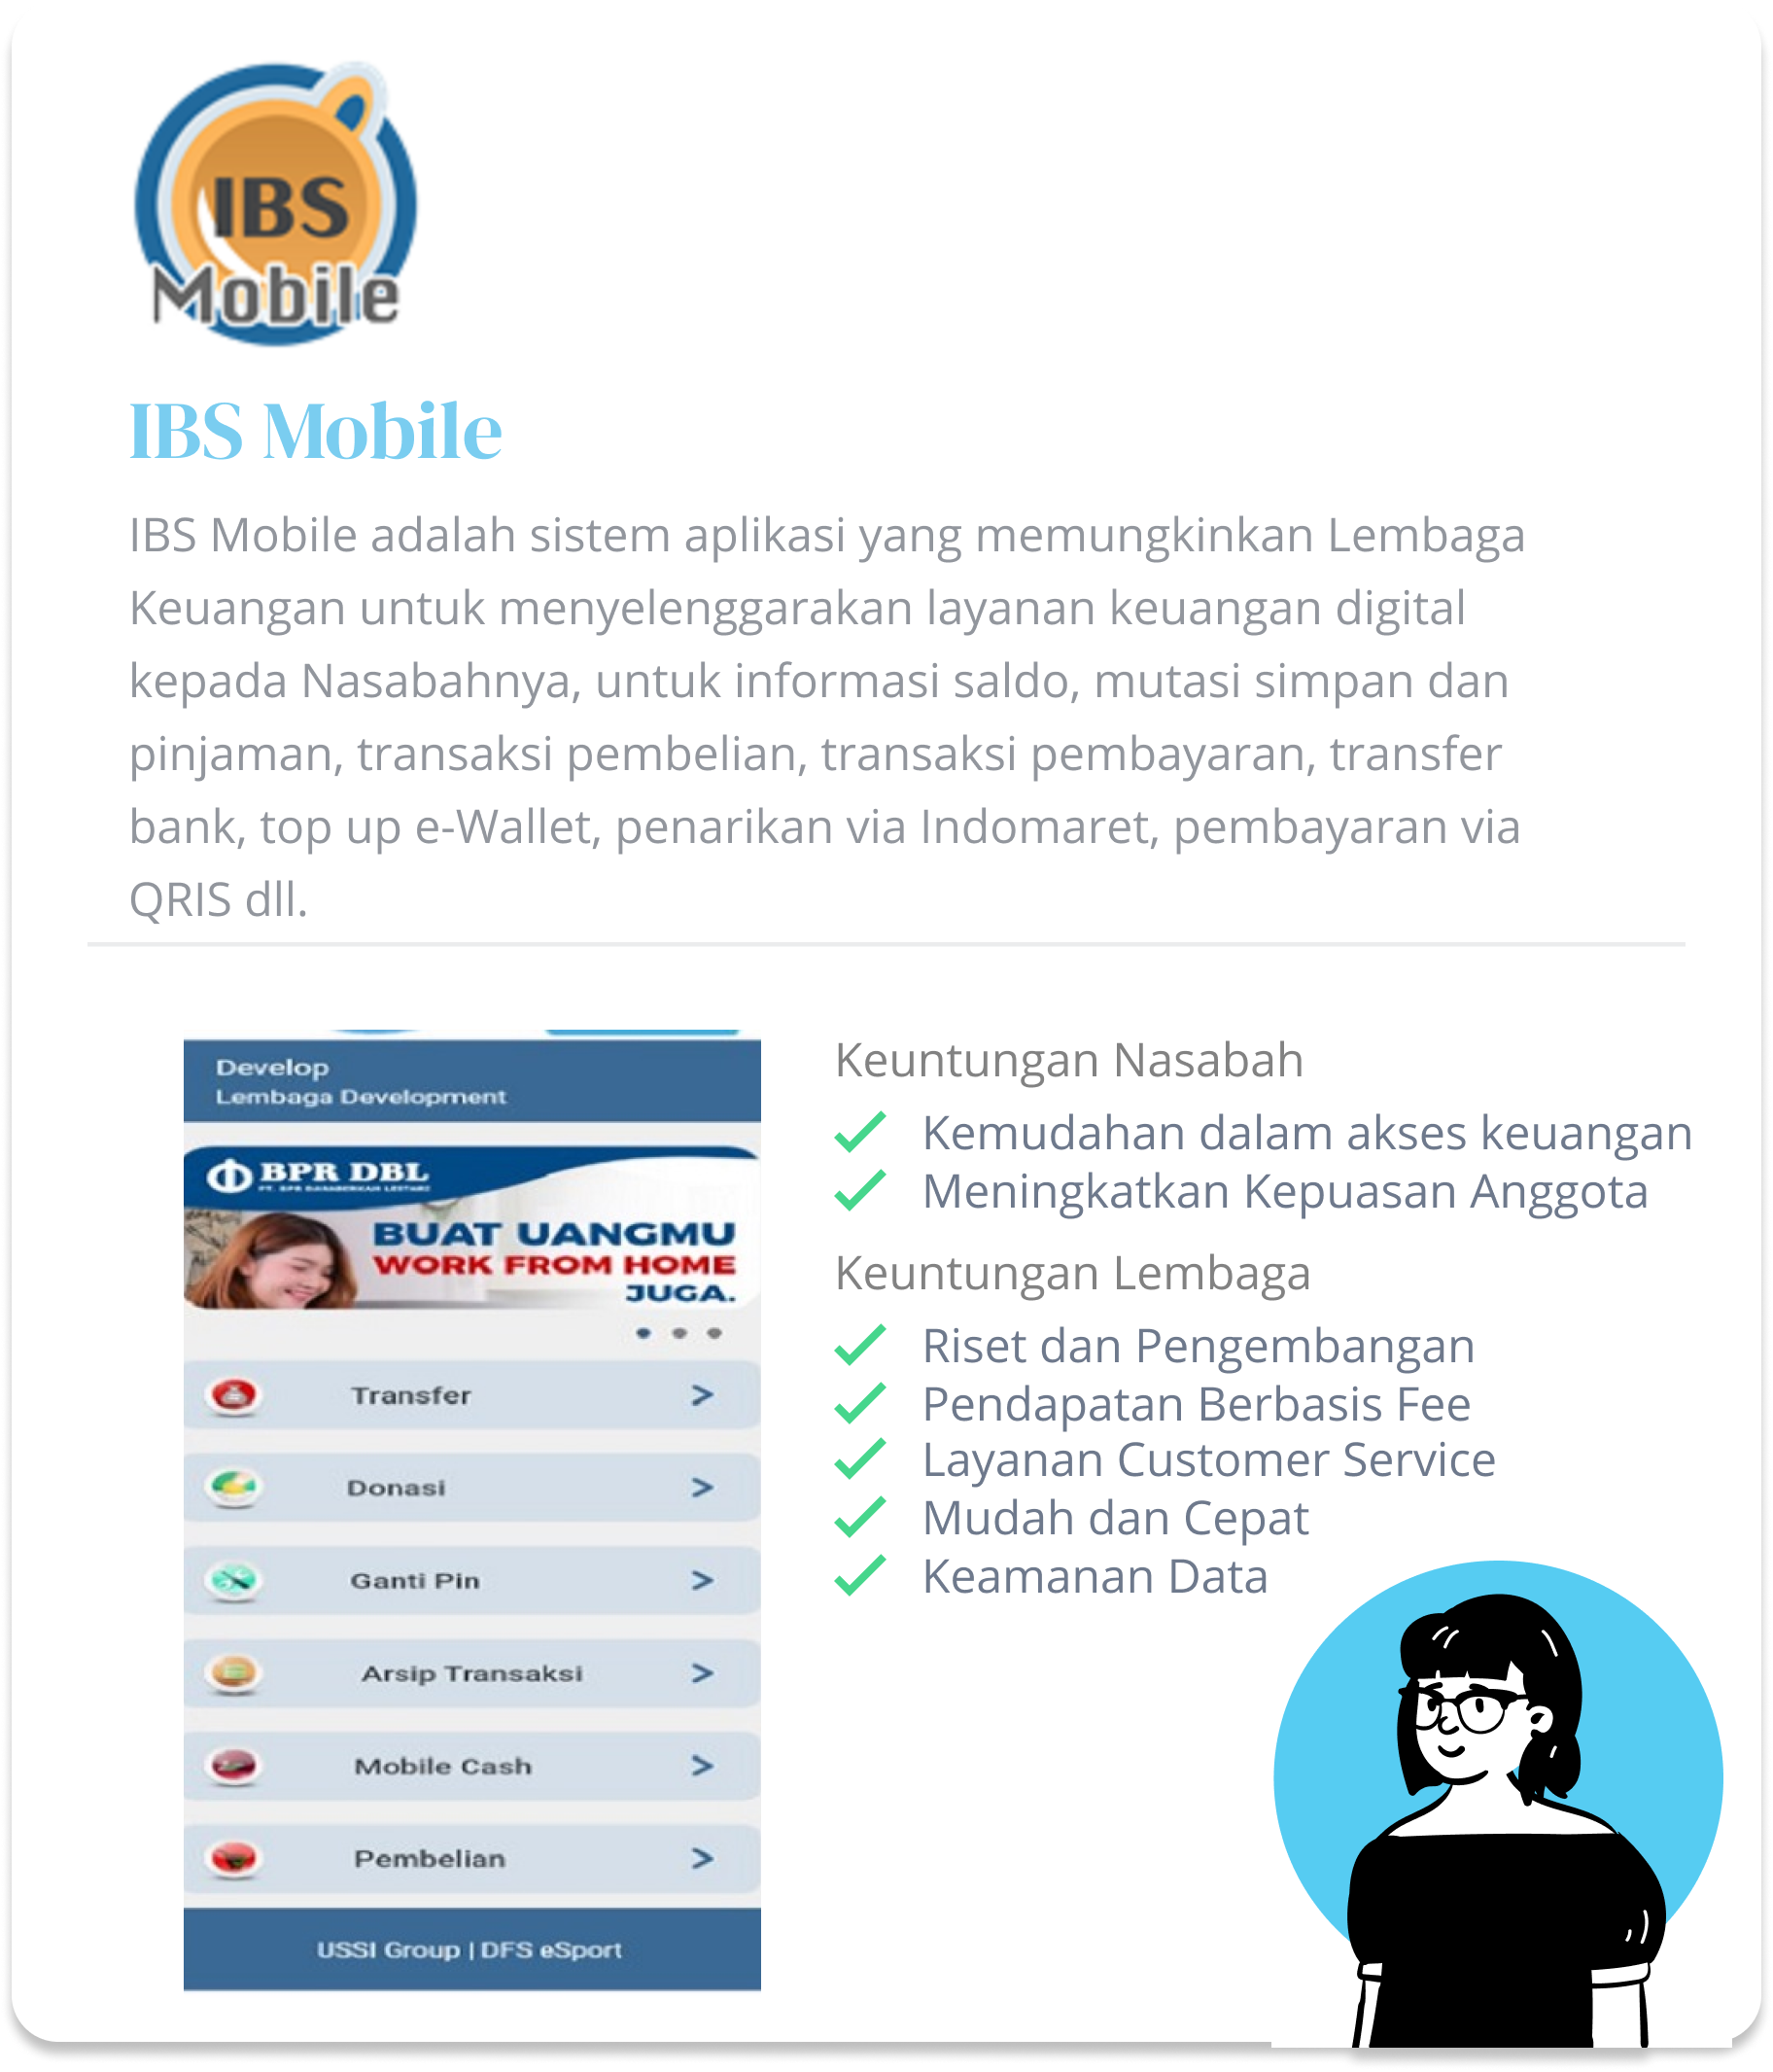 IBS Mobile